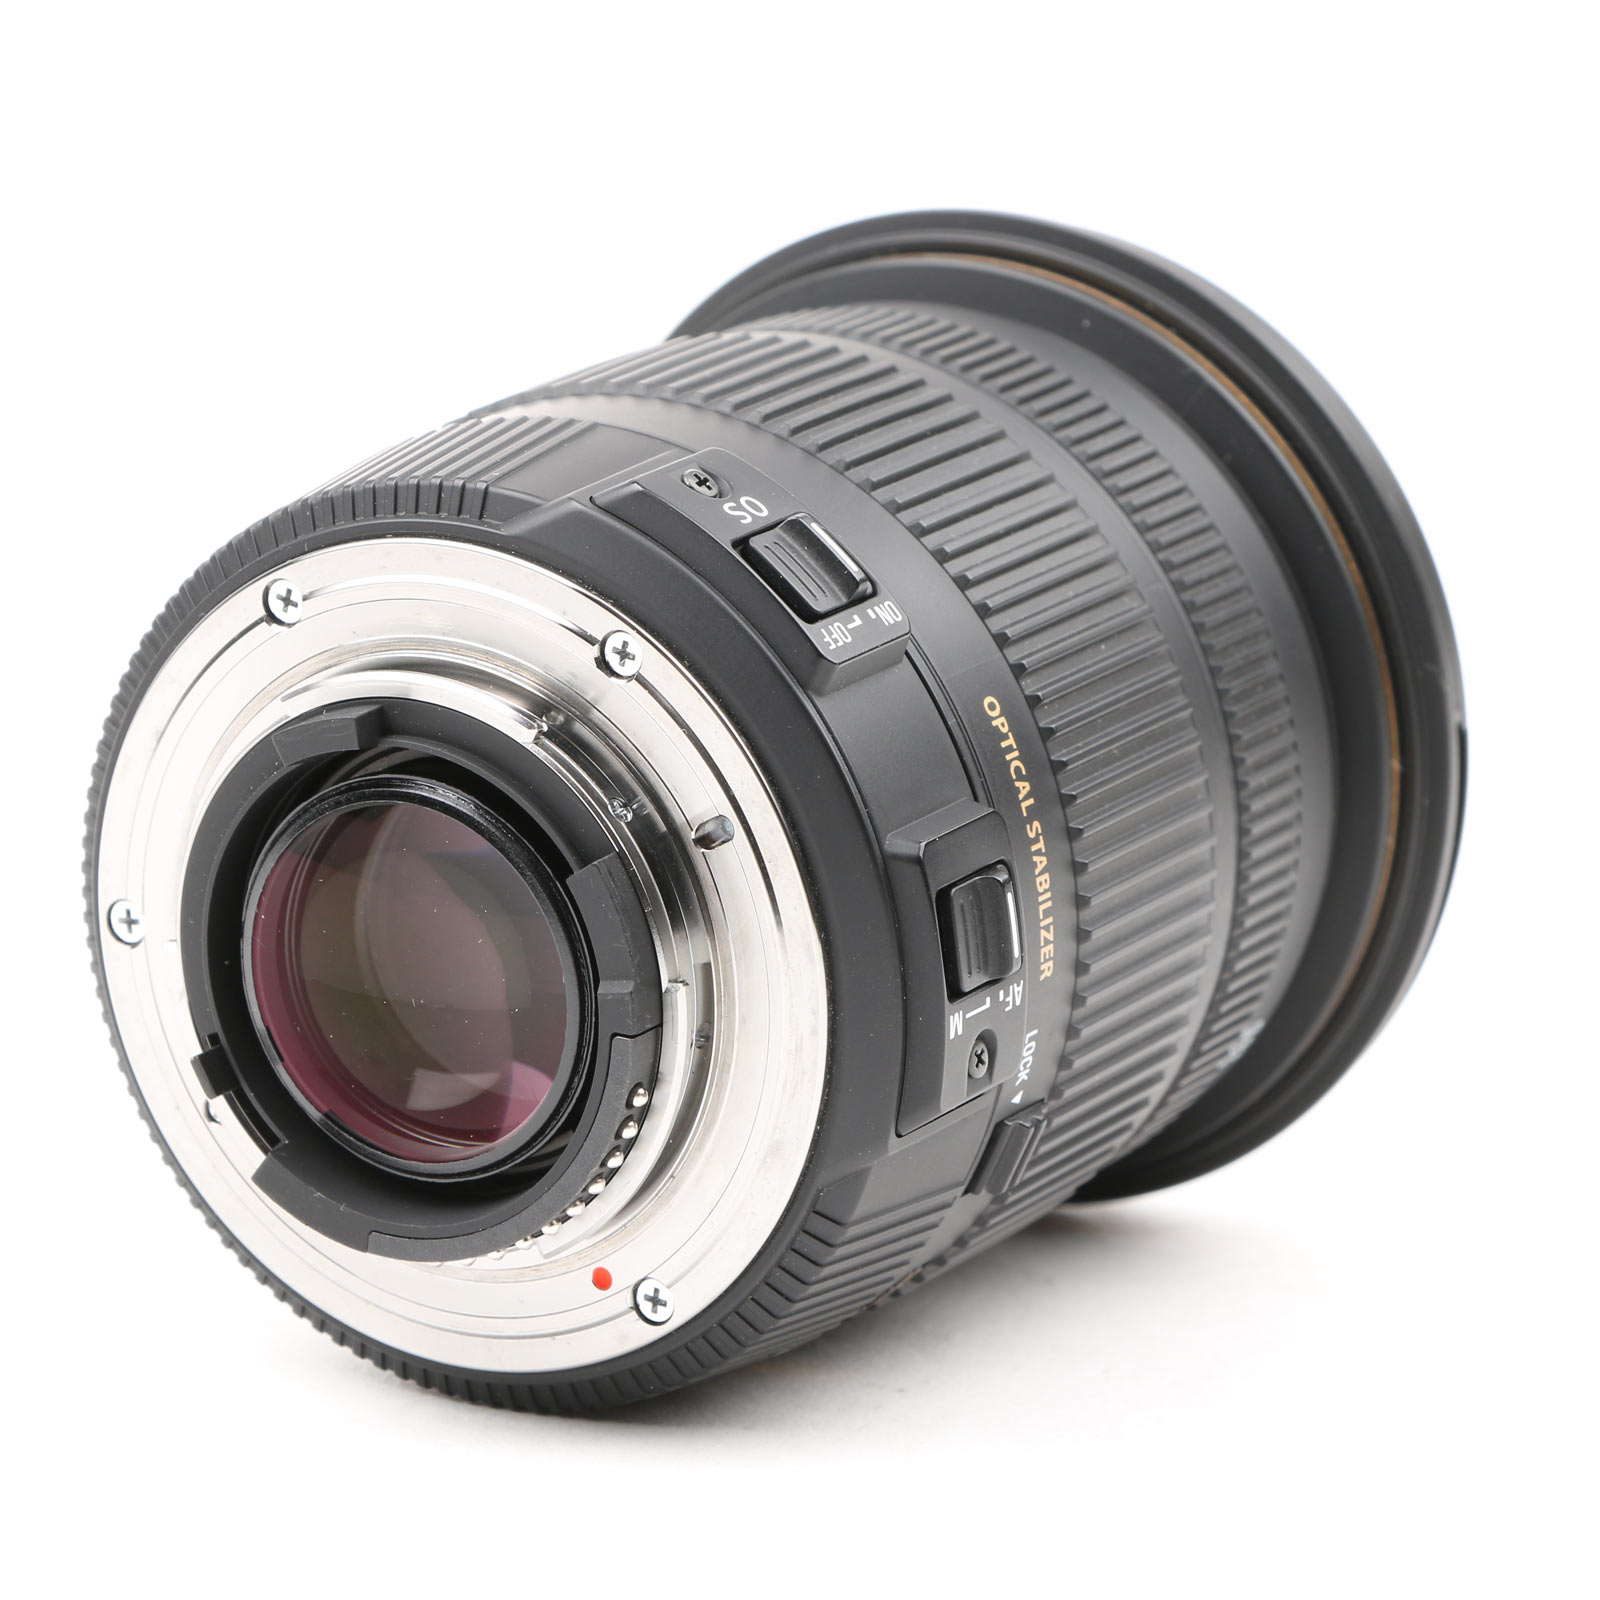 Sigma 17-50mm f2.8 EX DC OS HSM - Nikon Fit | Wex Photo Video